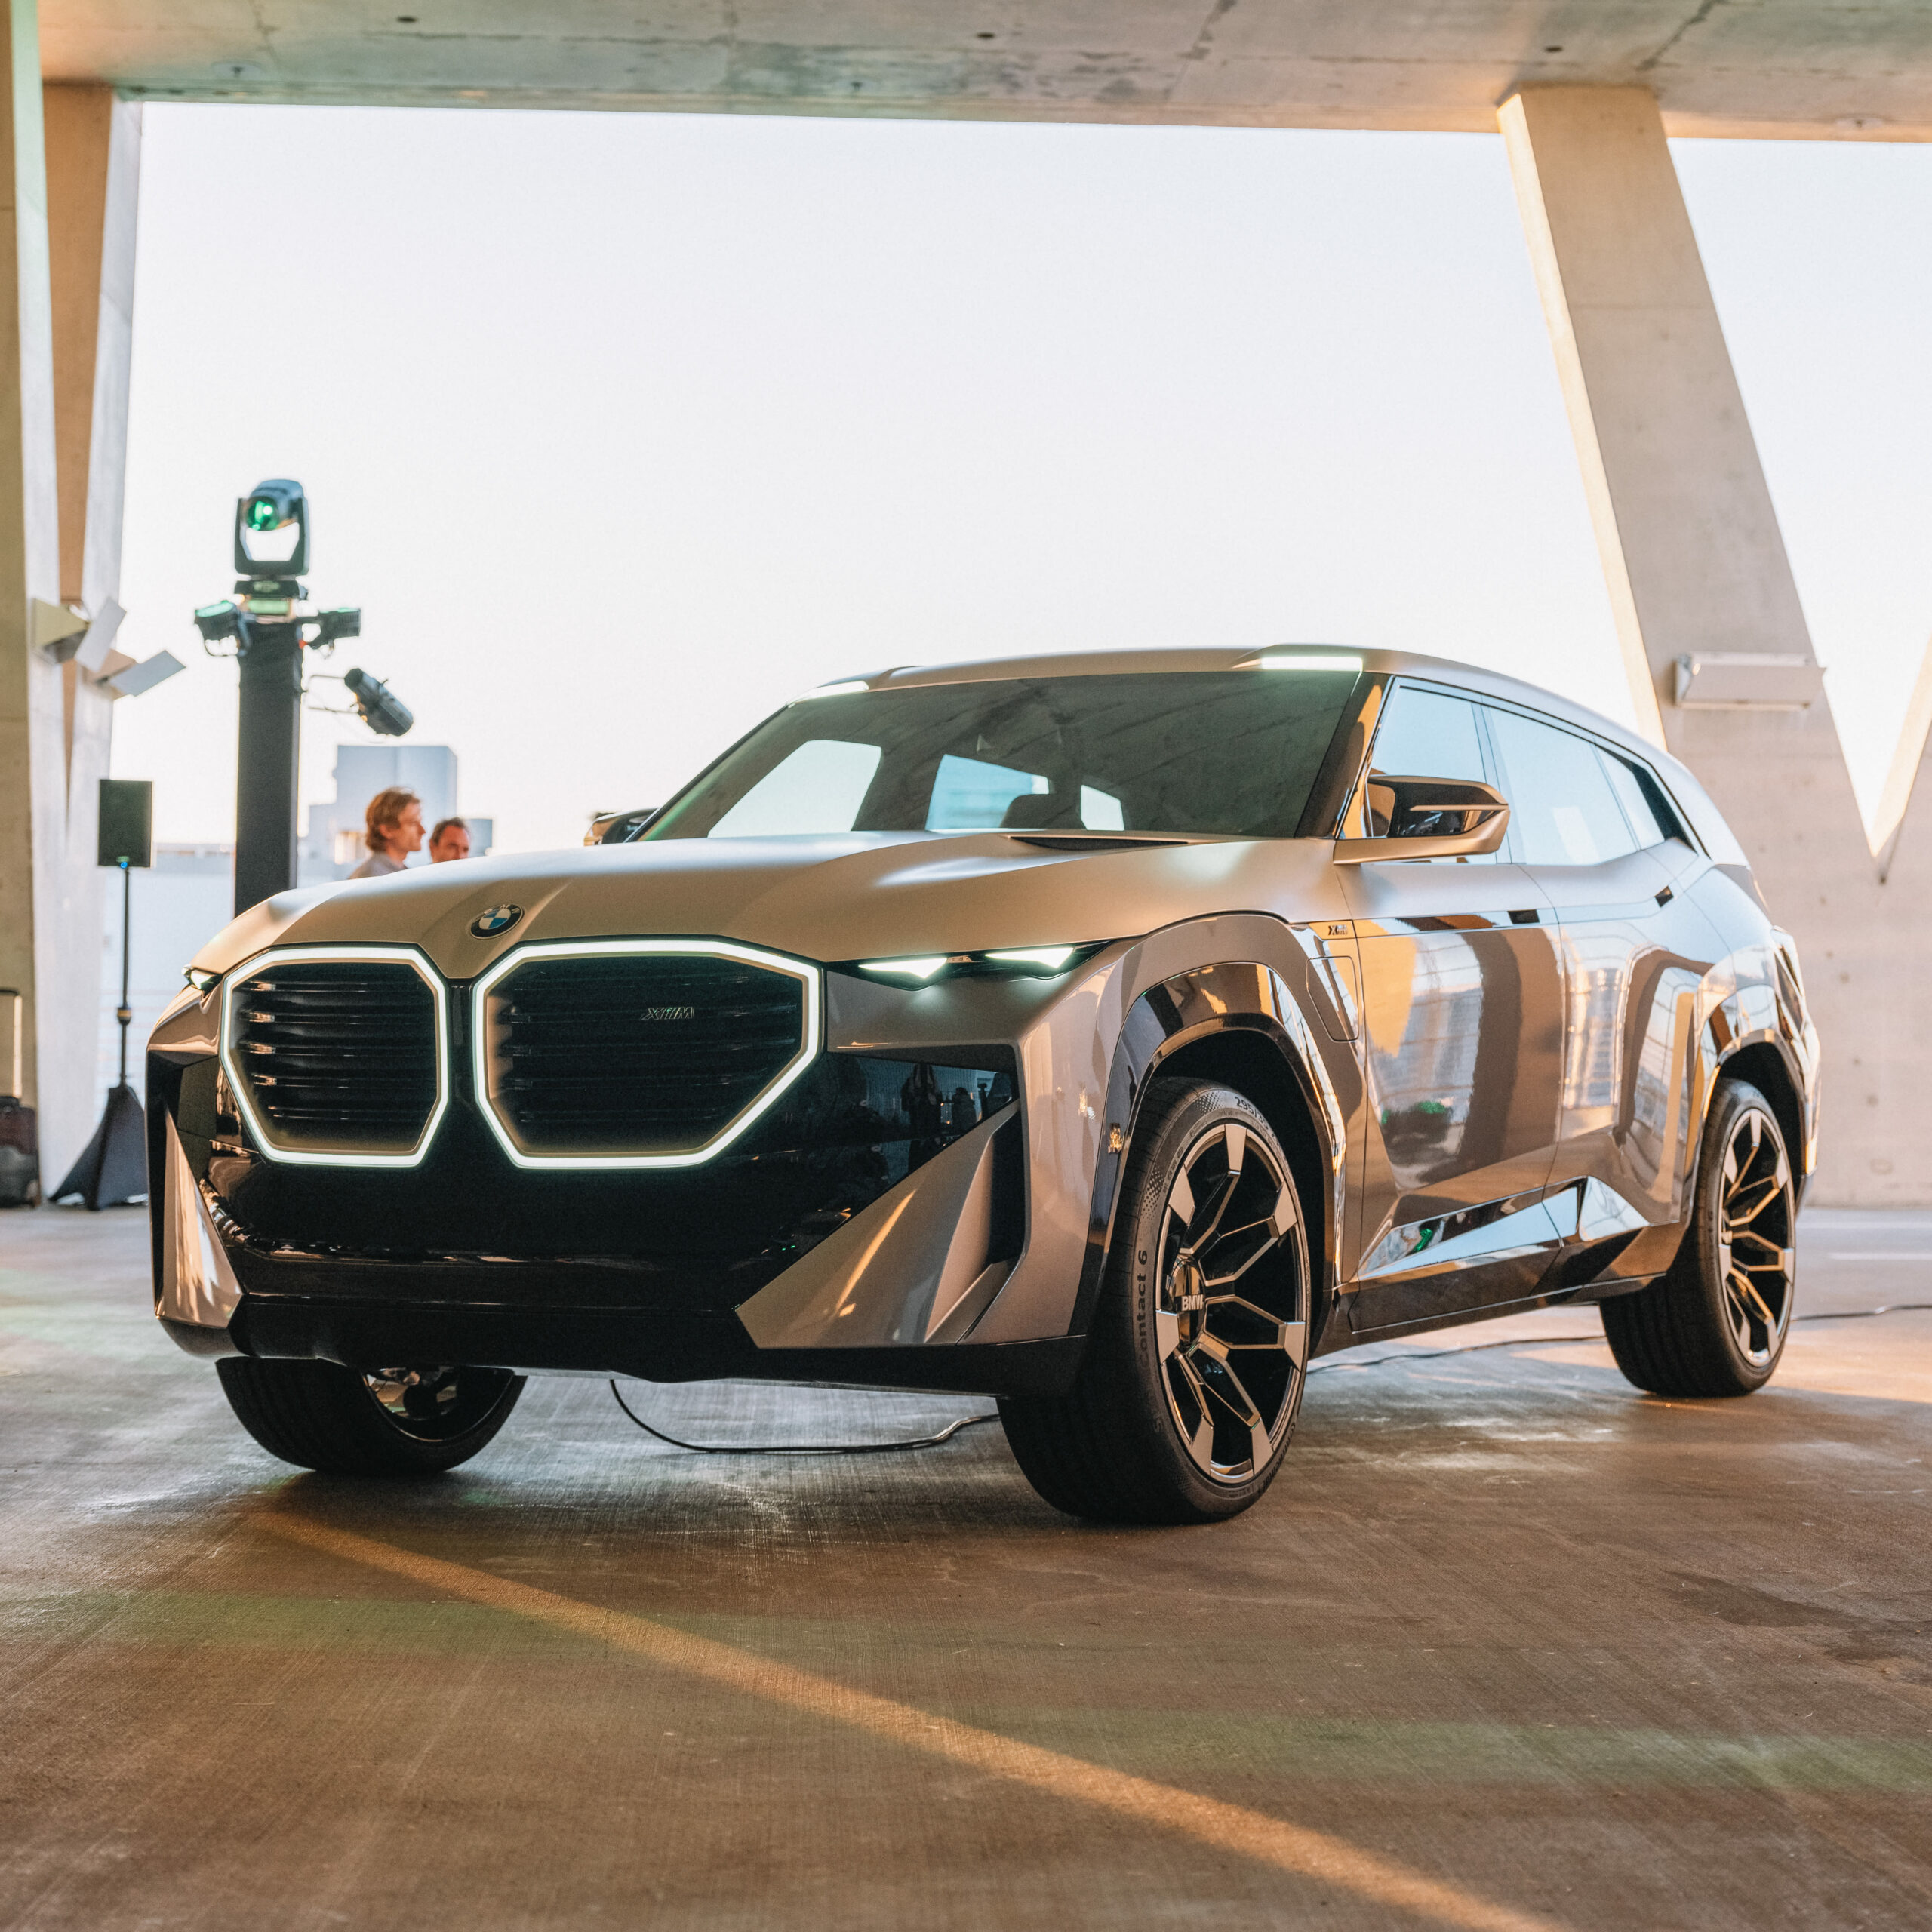 BMW unveils high-performance XM hybrid electric concept vehicle